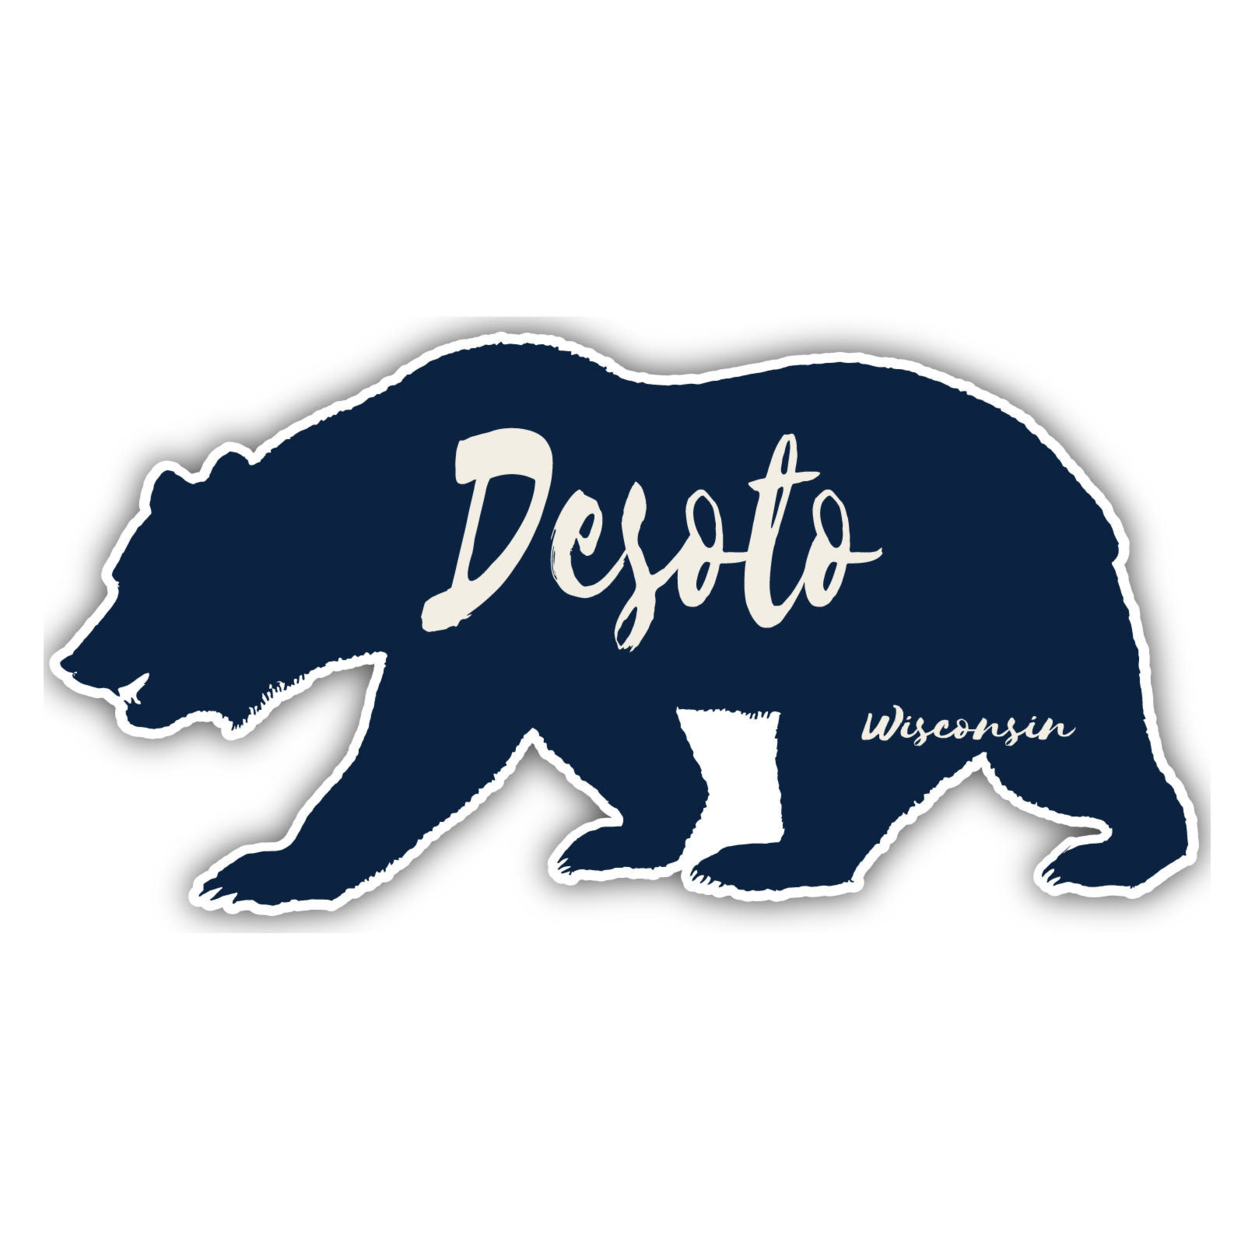 DeSoto Wisconsin Souvenir Decorative Stickers (Choose Theme And Size) - Single Unit, 10-Inch, Bear